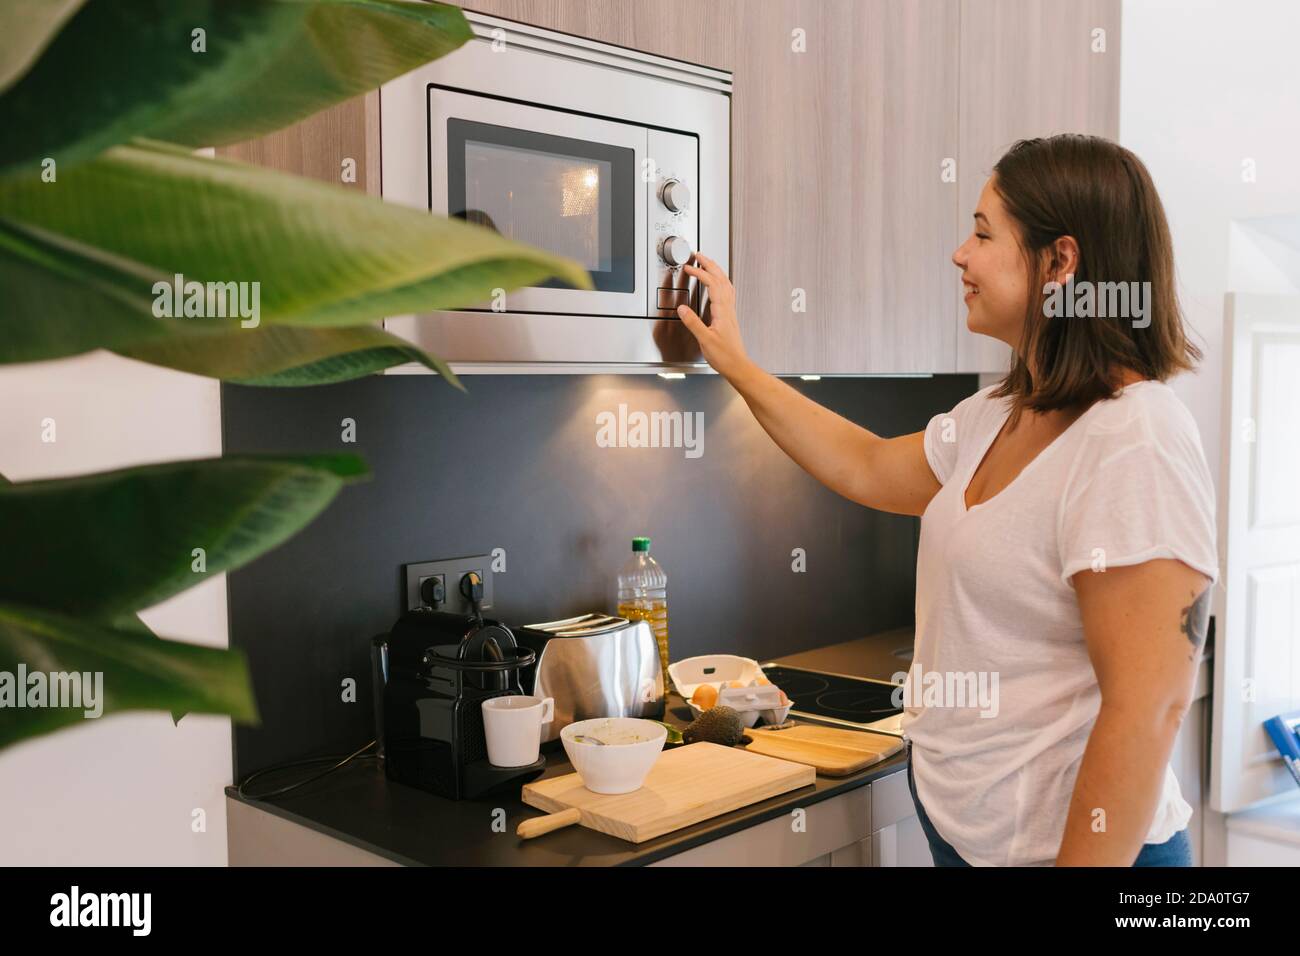 https://c8.alamy.com/comp/2DA0TG7/woman-using-a-microwave-for-cooking-some-poached-eggs-2DA0TG7.jpg